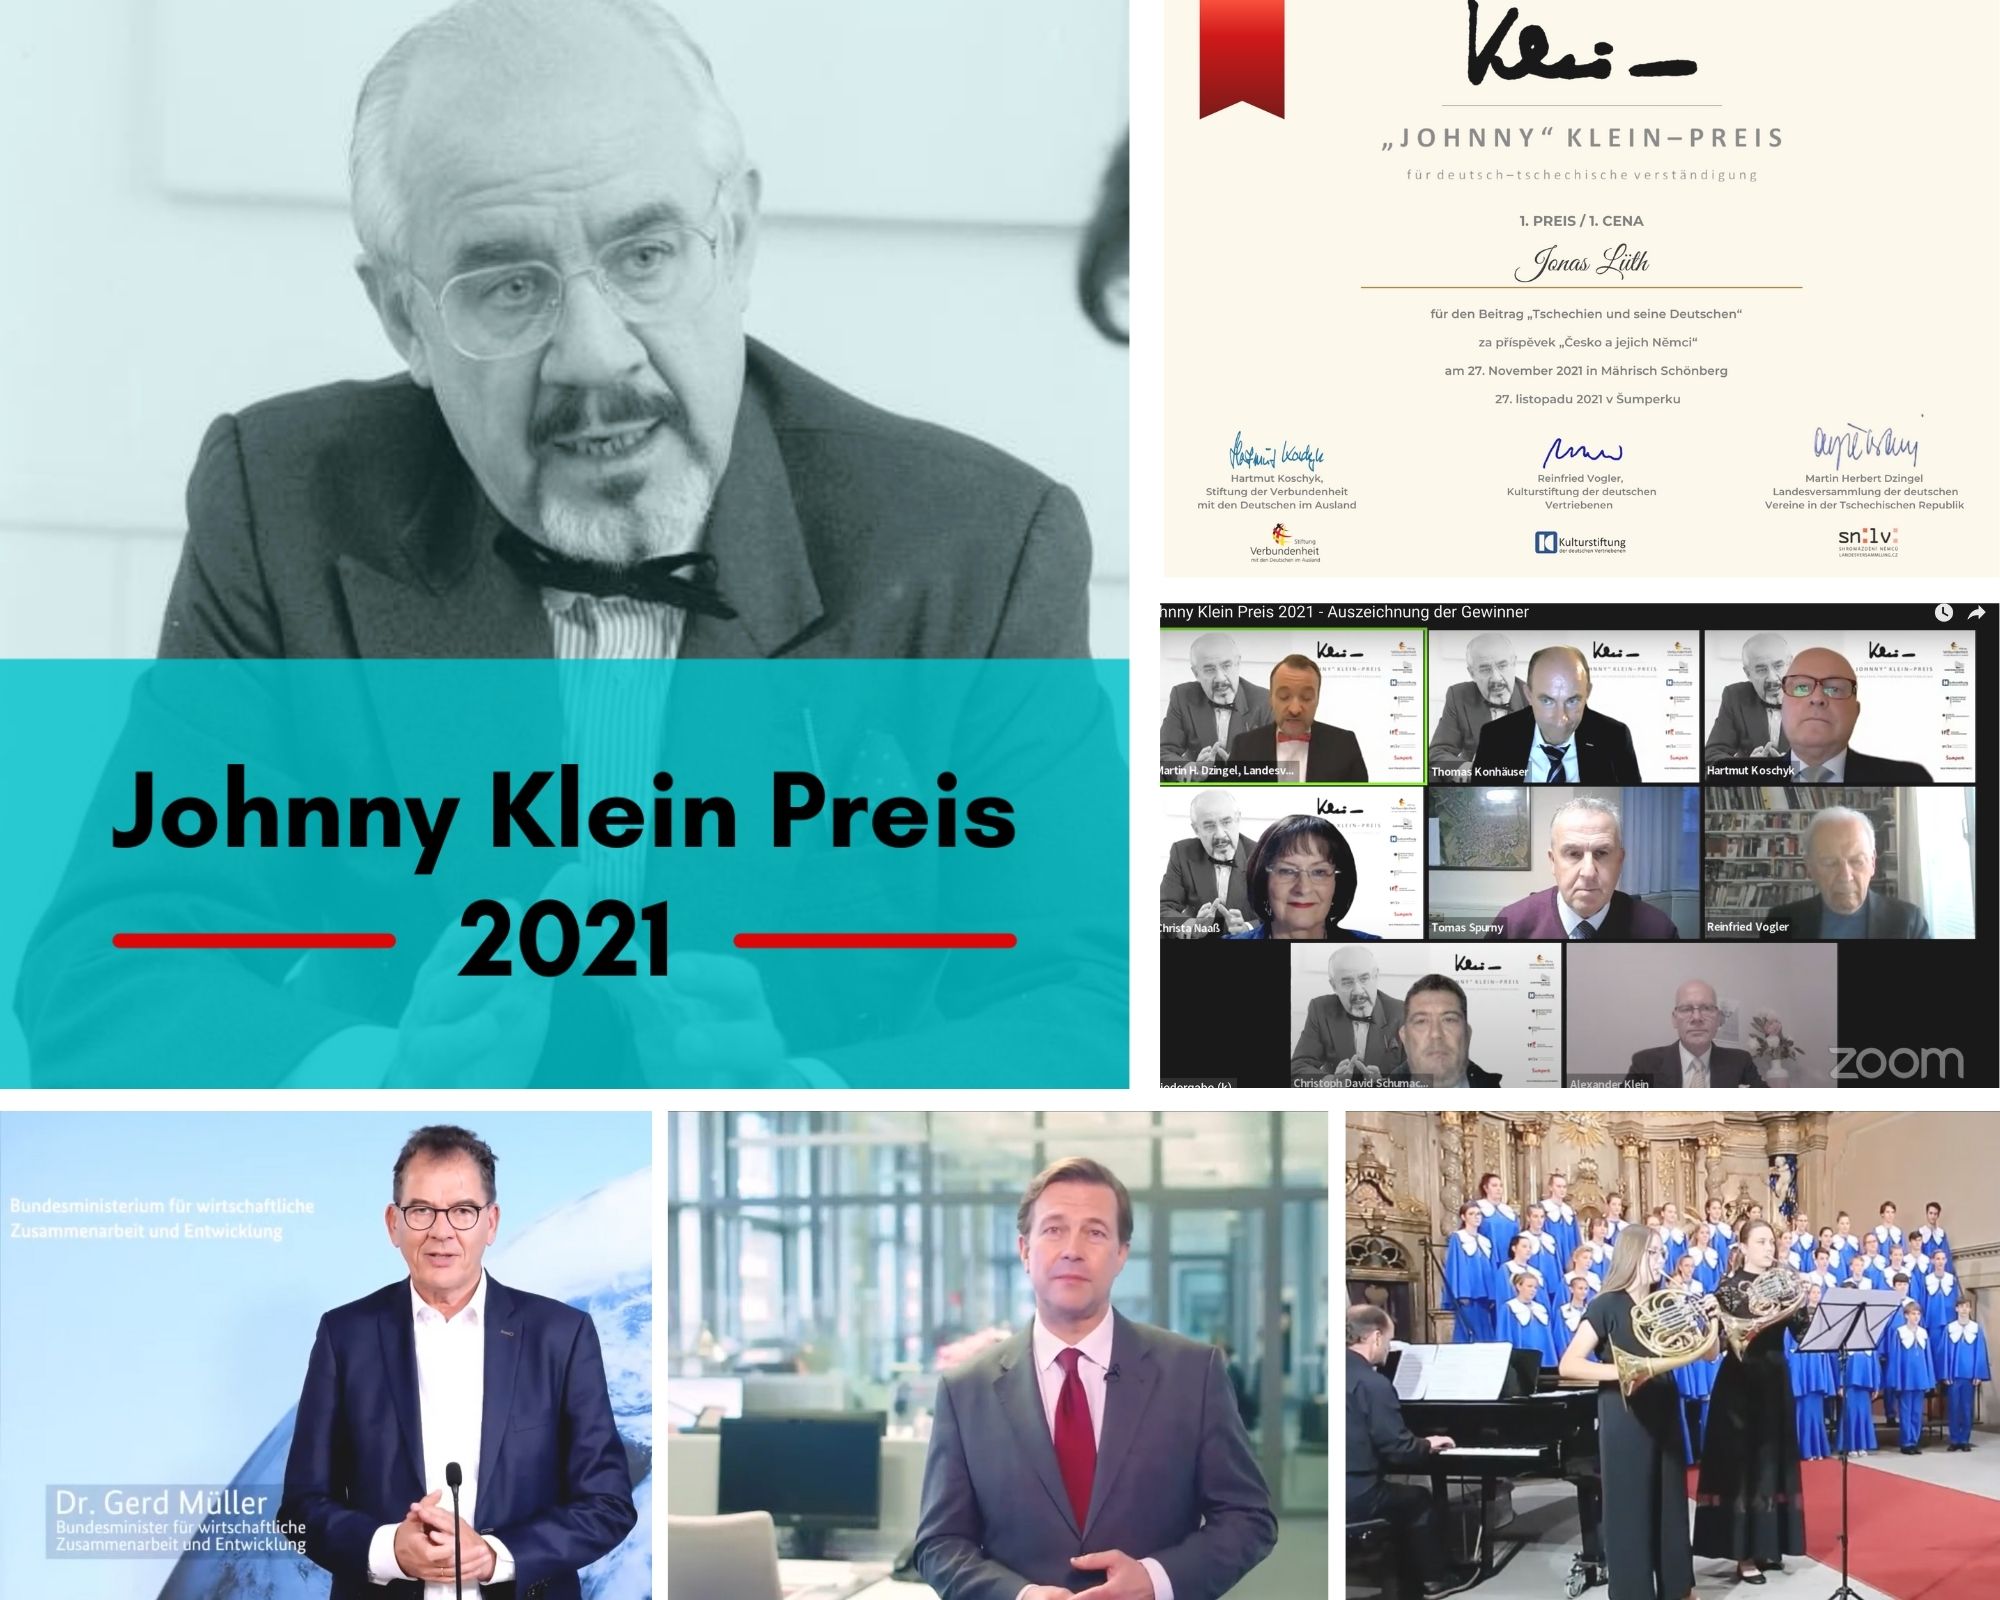 Johnny Kelin-Preis Verleihung 2021